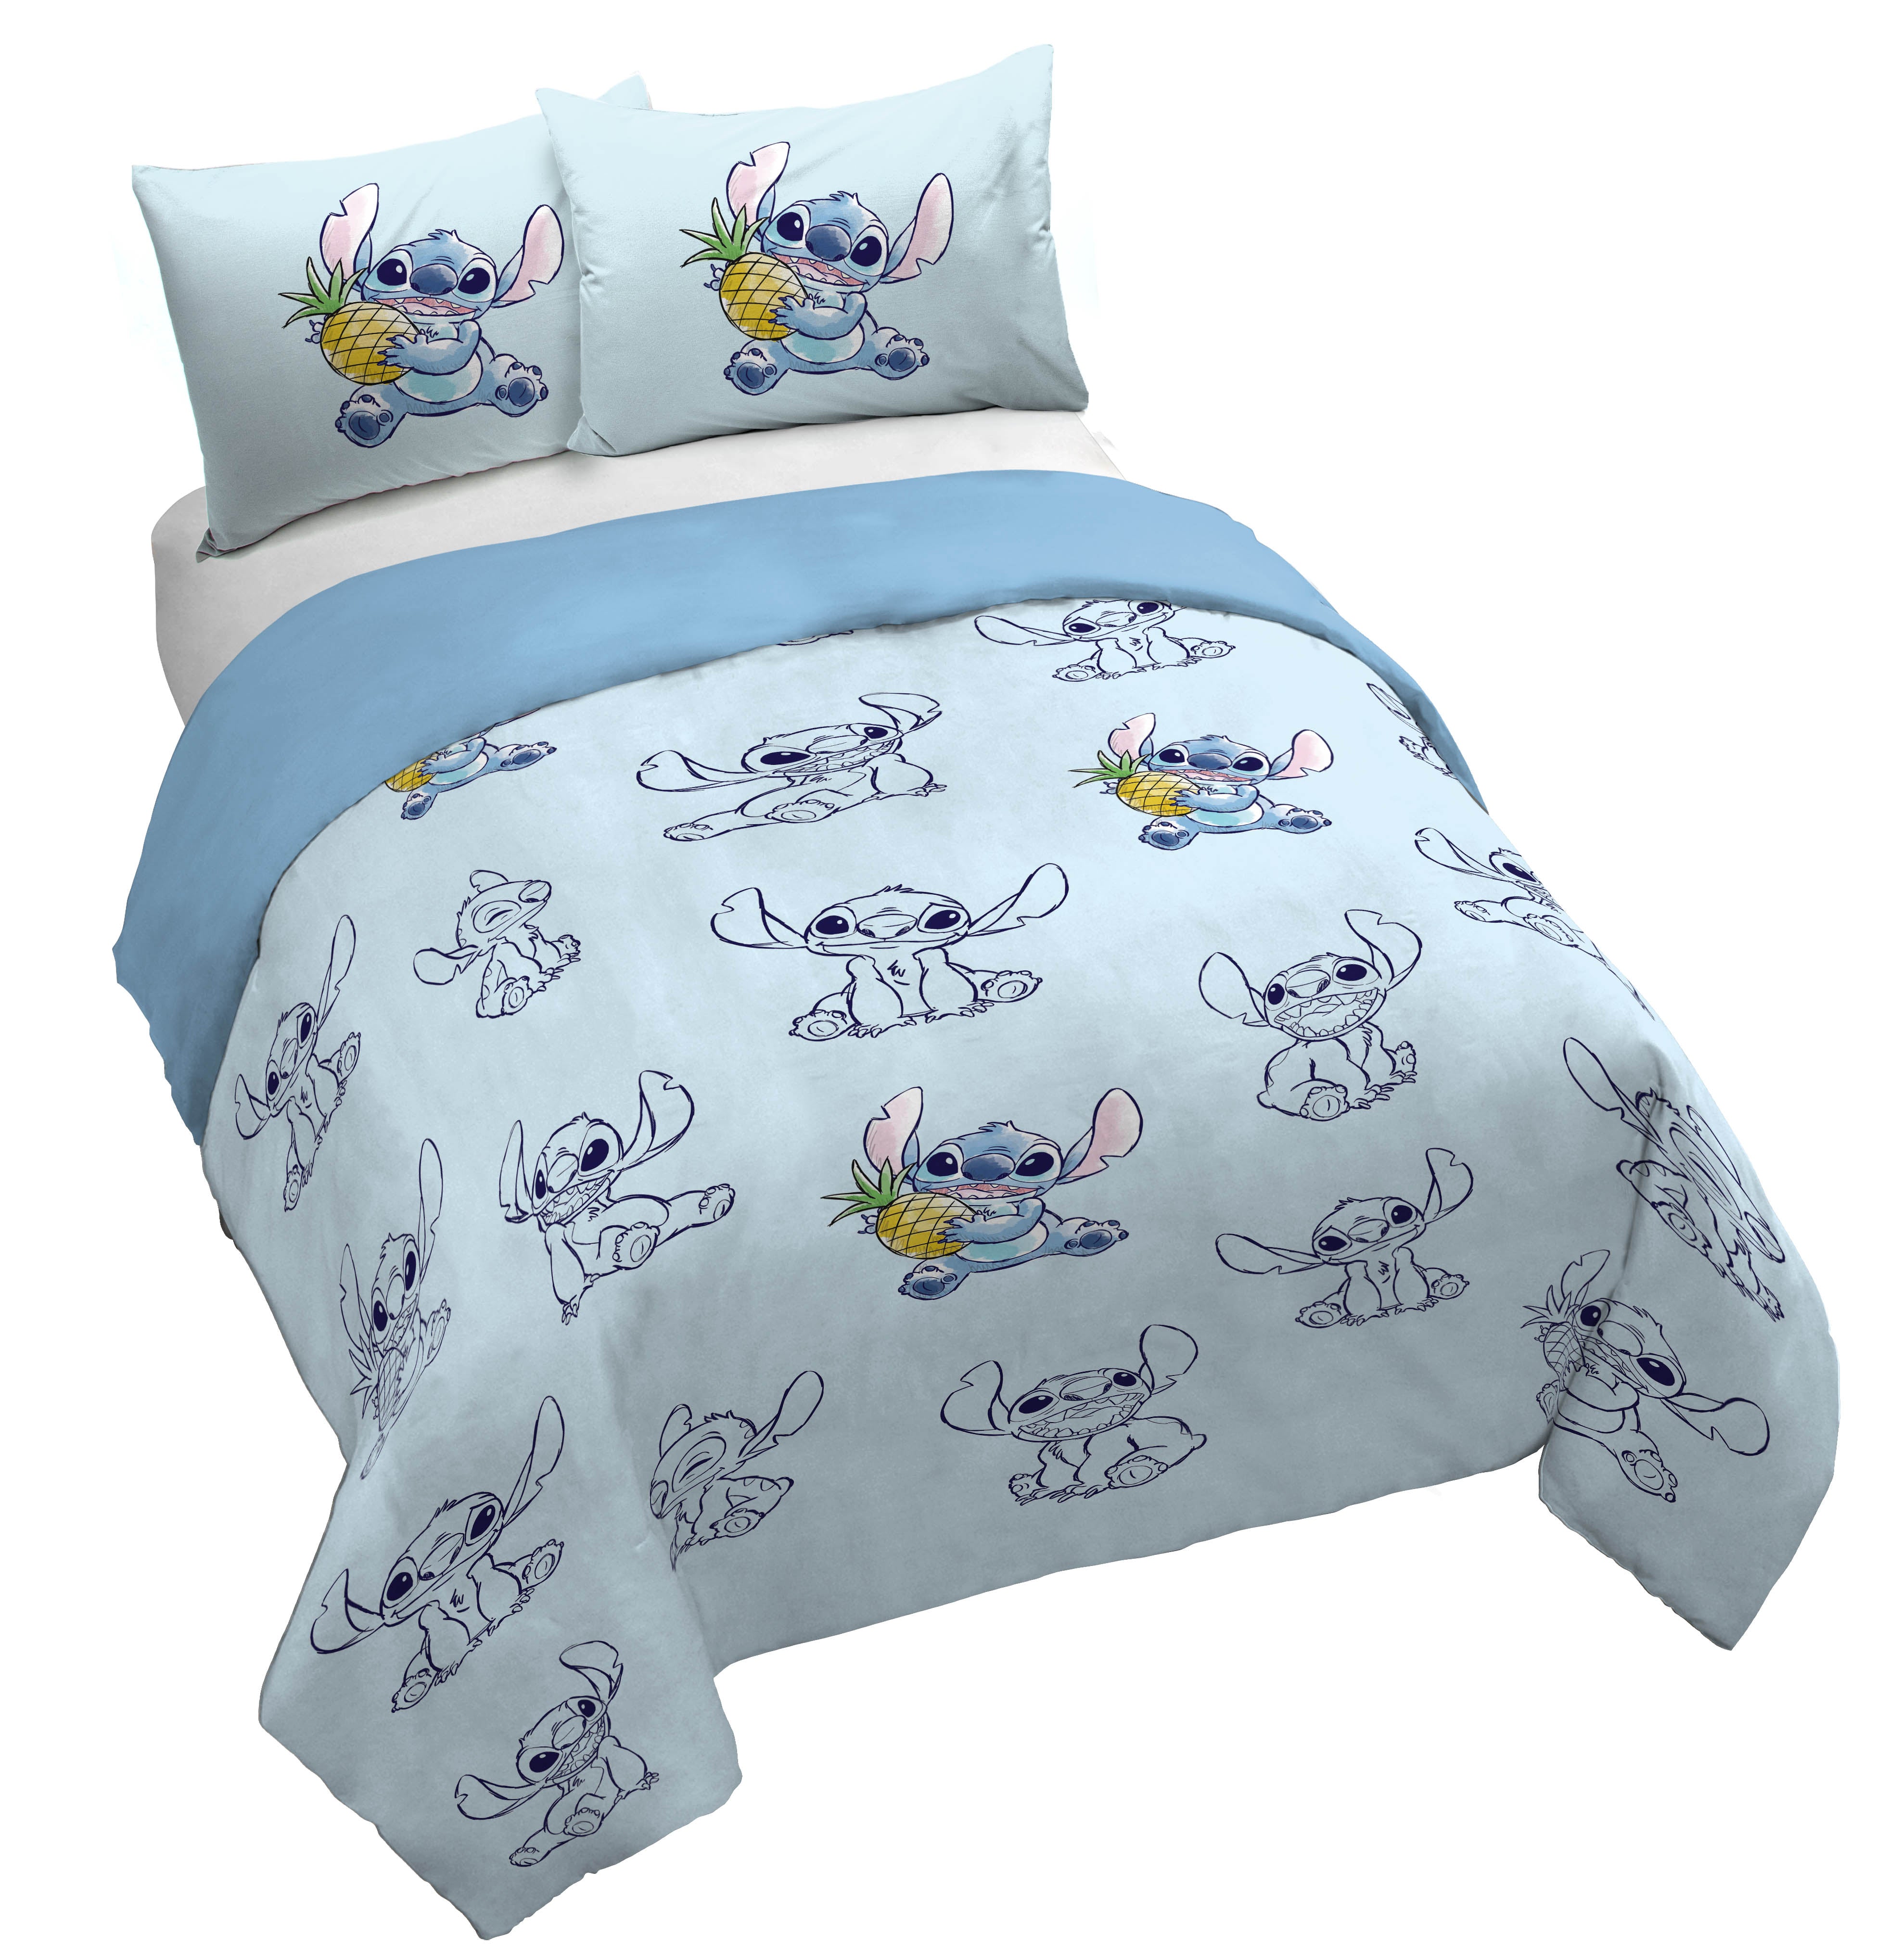 Pyjama Stitch Disney en coton - New discount.com